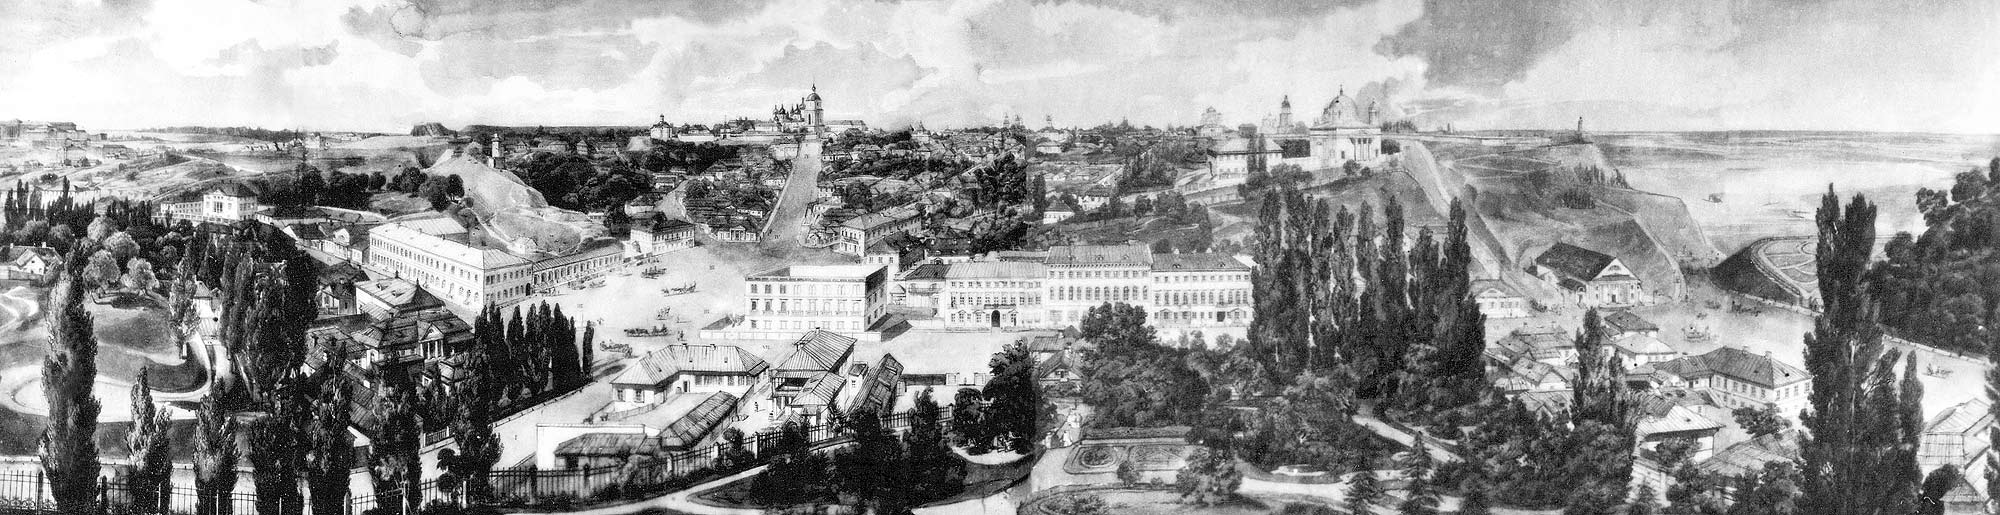 Фрагмент панорамы Киева. Рисунок Гроте. 1850 г.